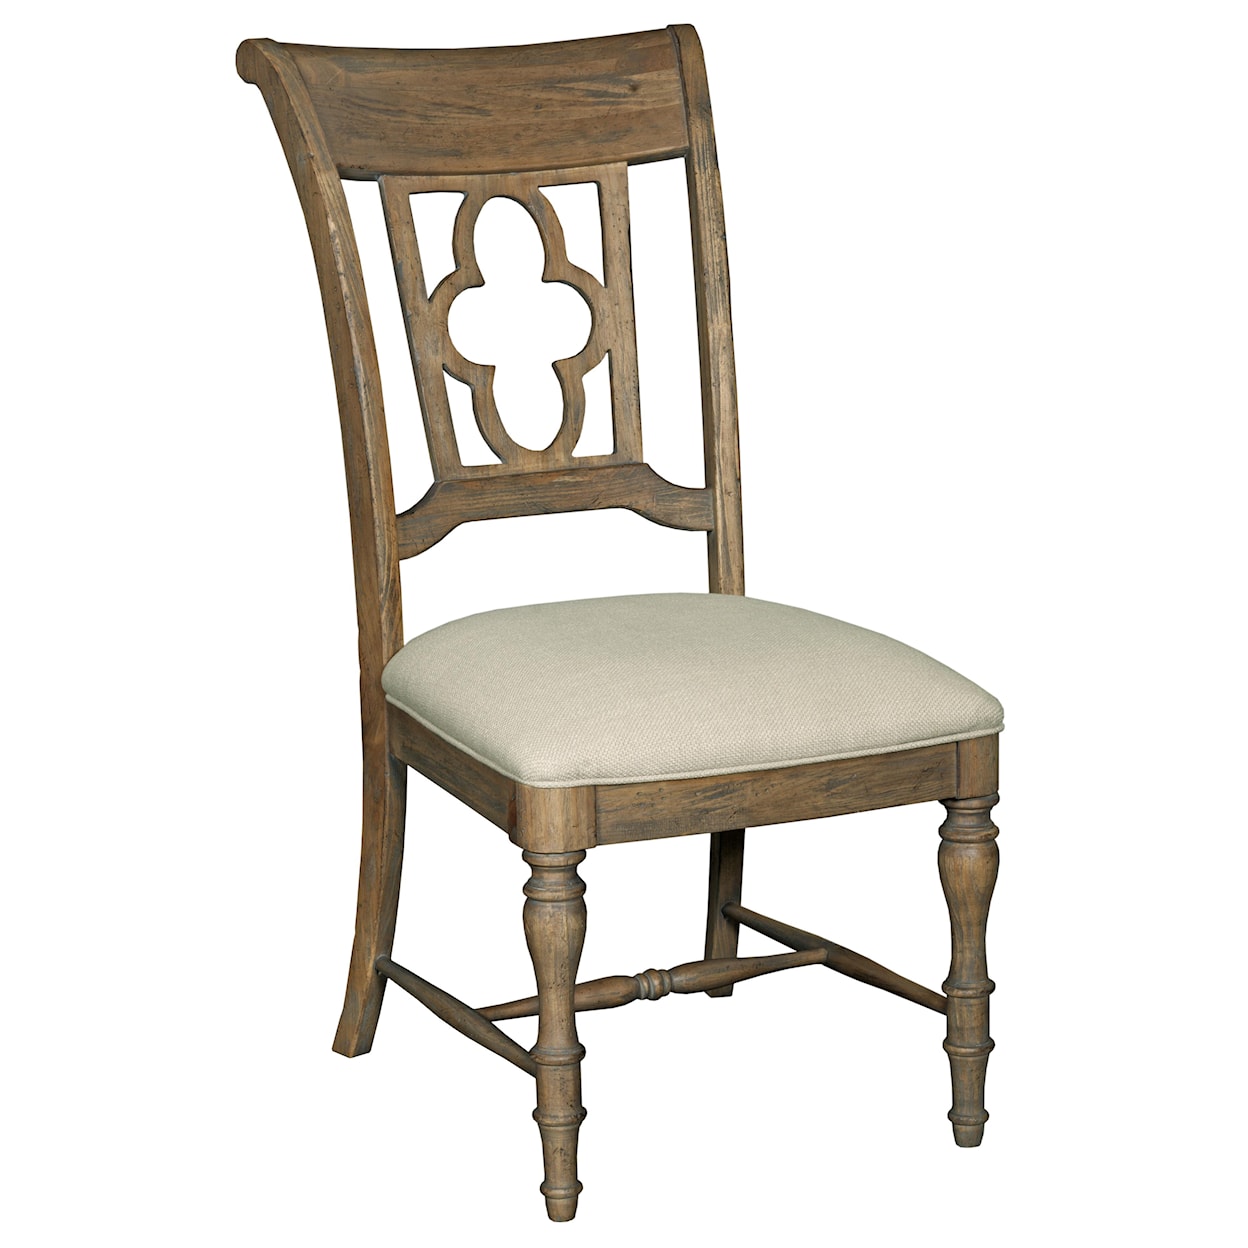 Kincaid Furniture Weatherford Side Chair